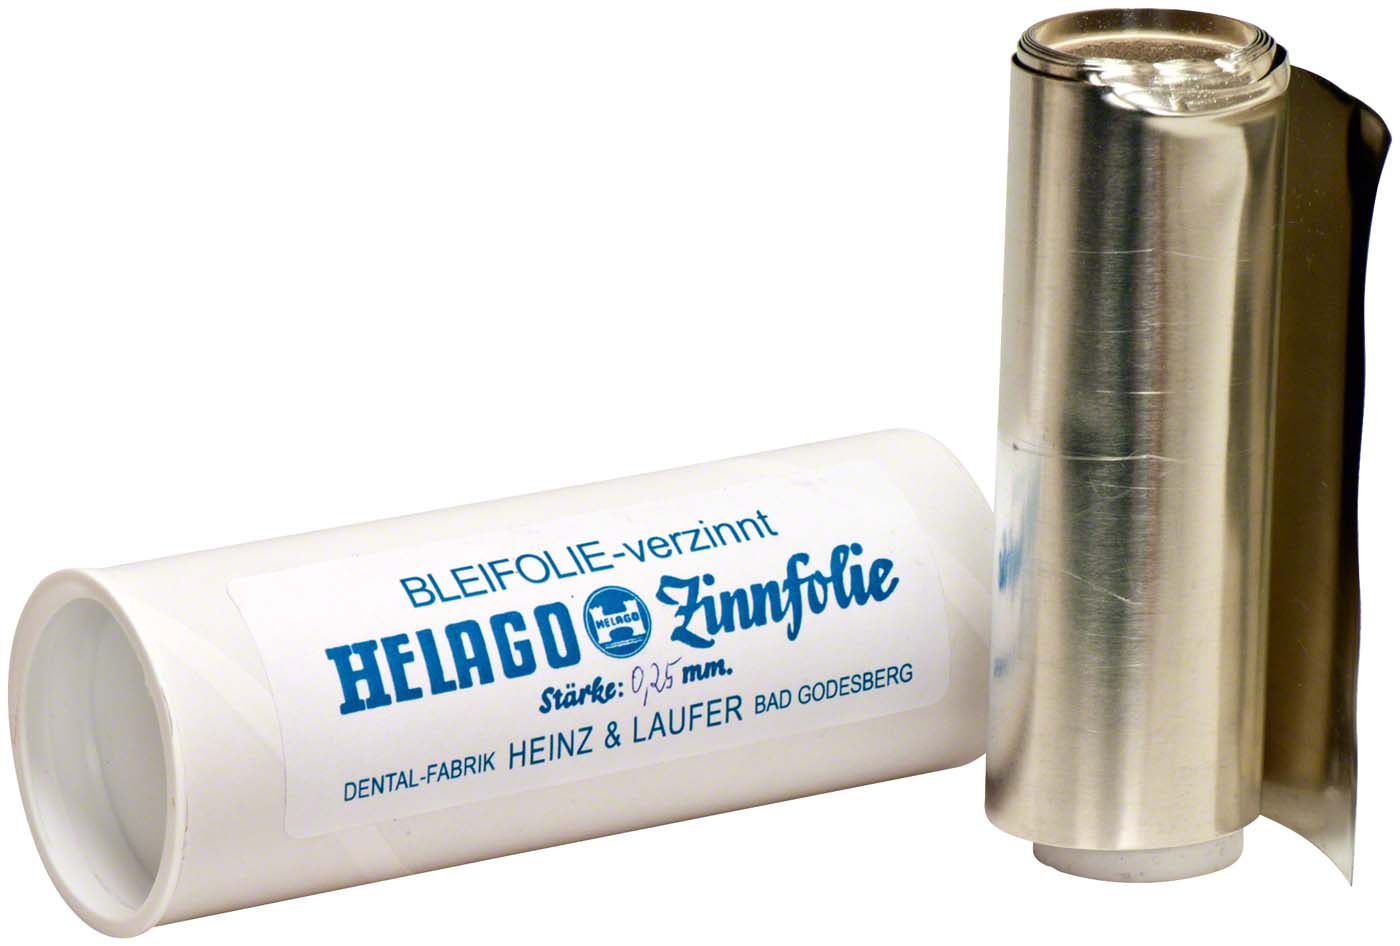 HELAGO Bleifolien verzinnt Heinz &amp; Laufer